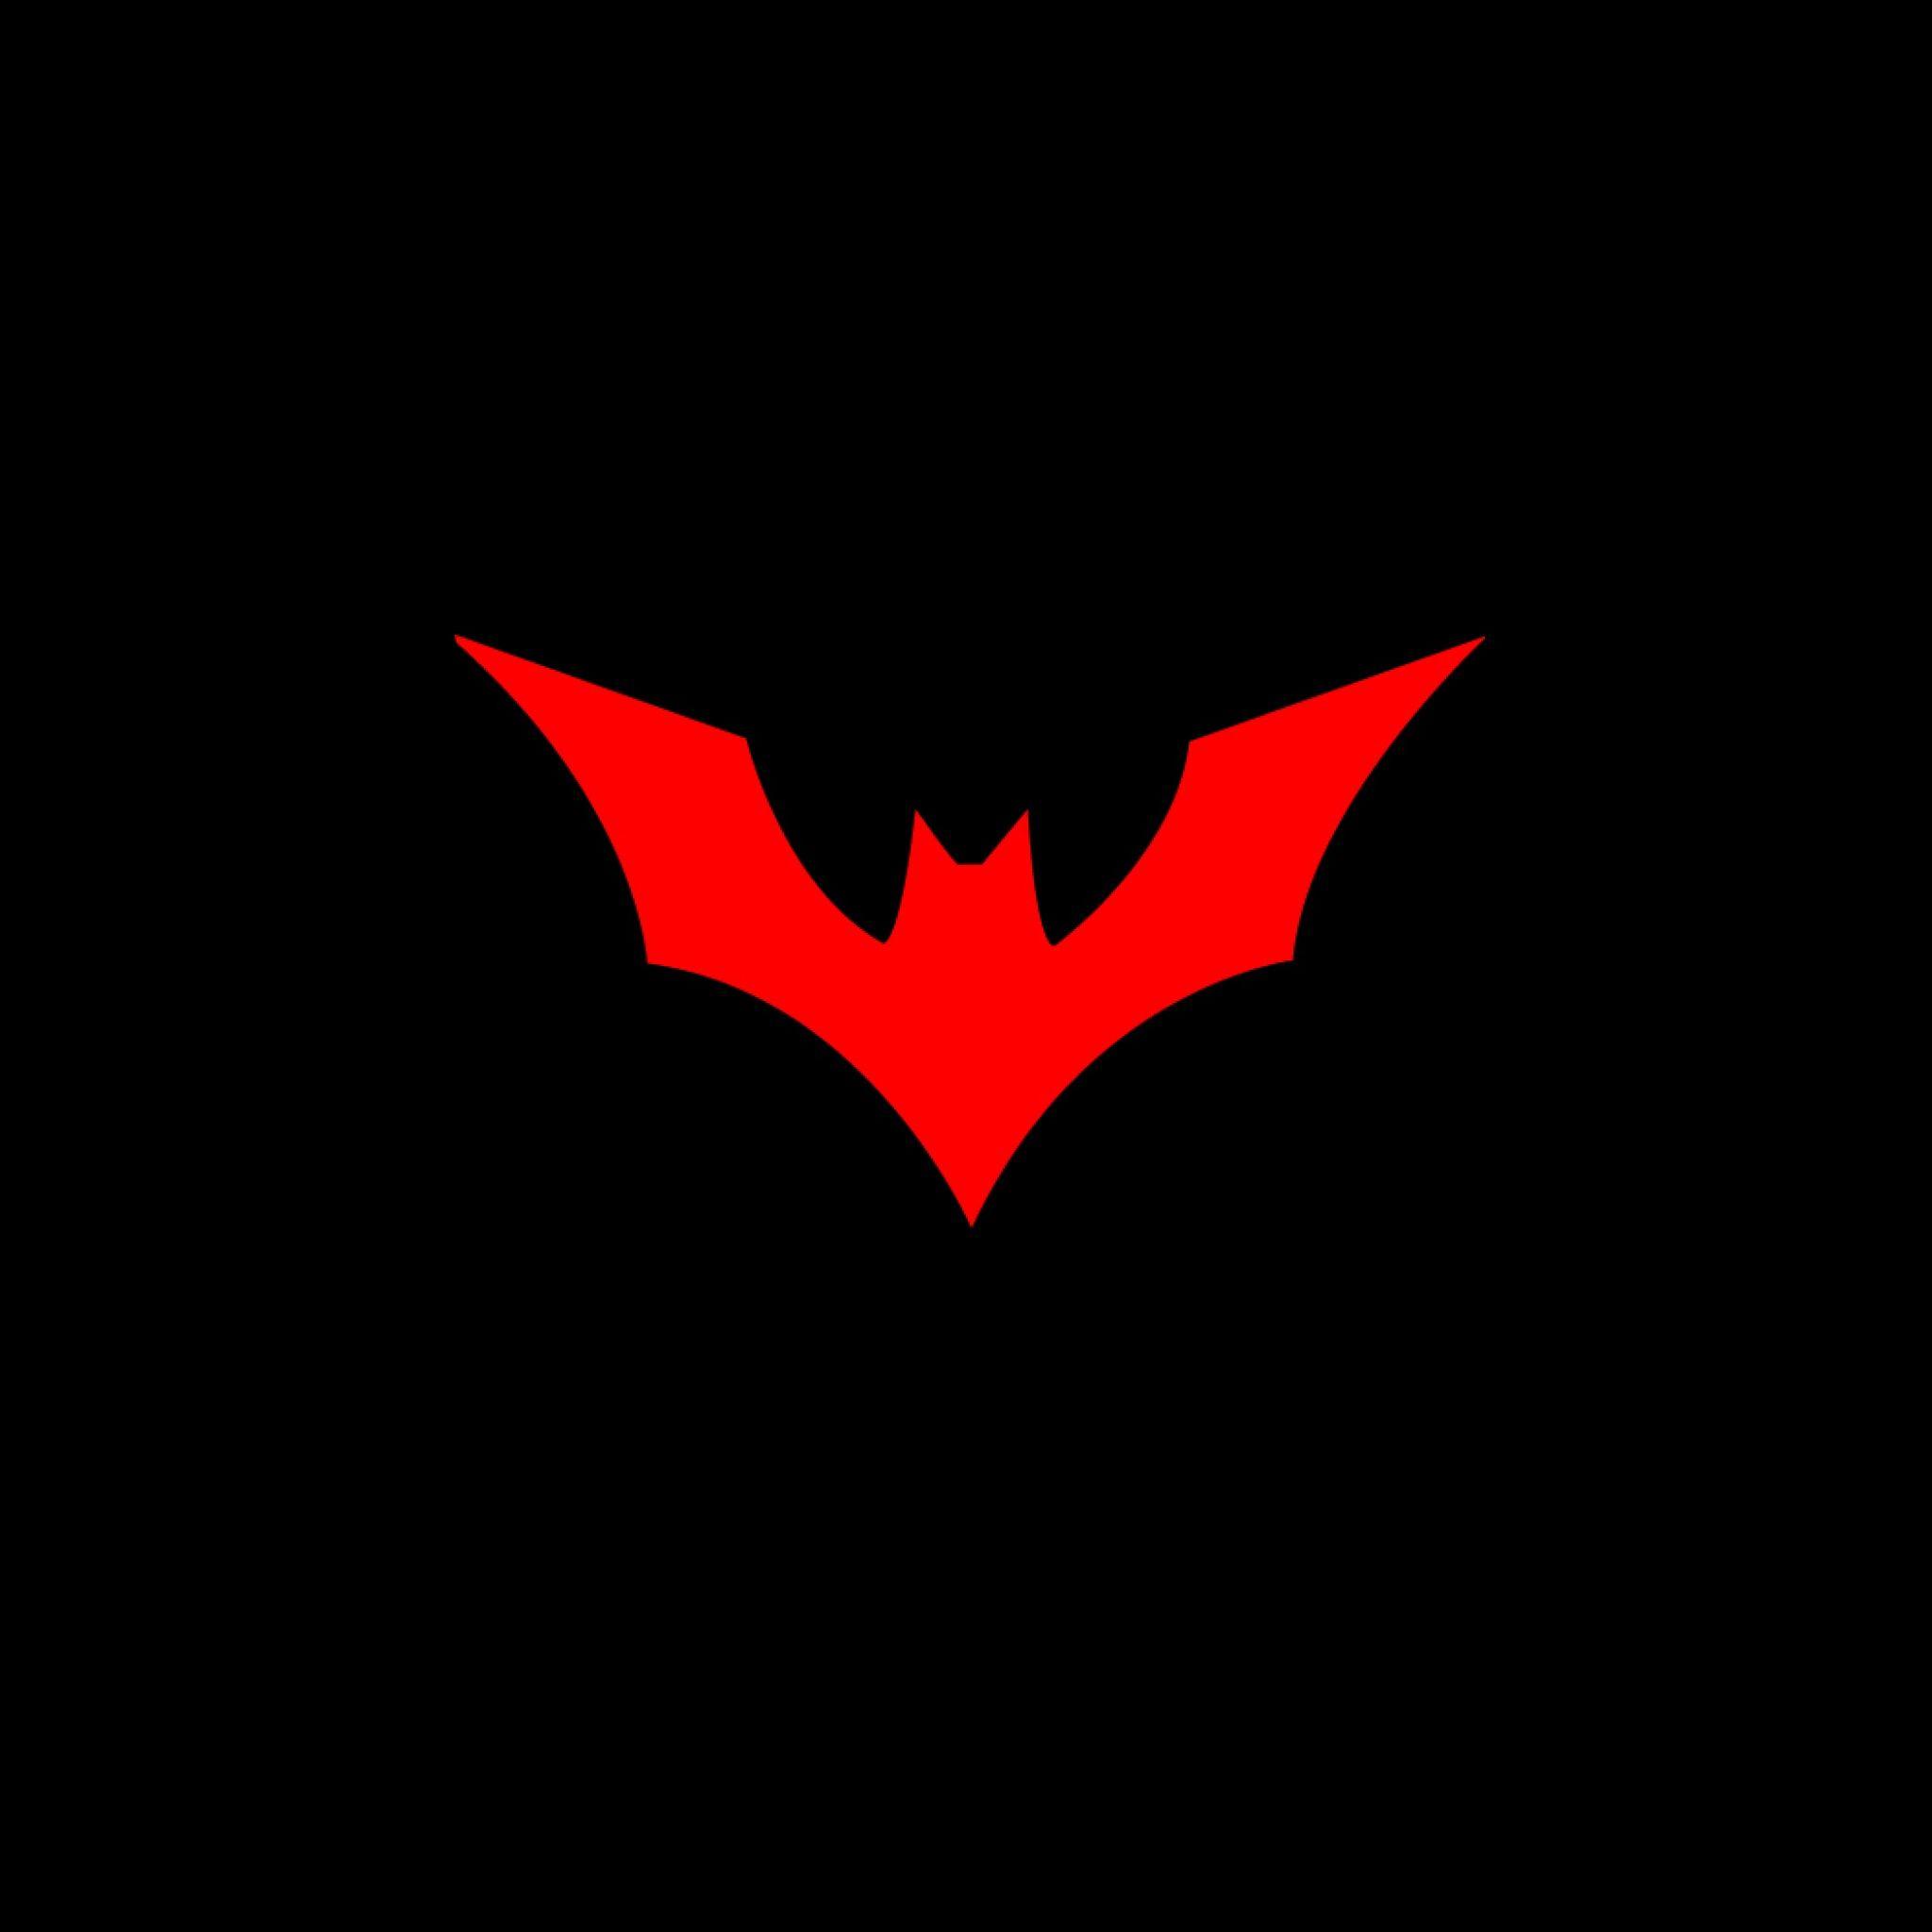 Red and Black Batman Logo - Download Red Batman Logo 2048 x 2048 Wallpaper